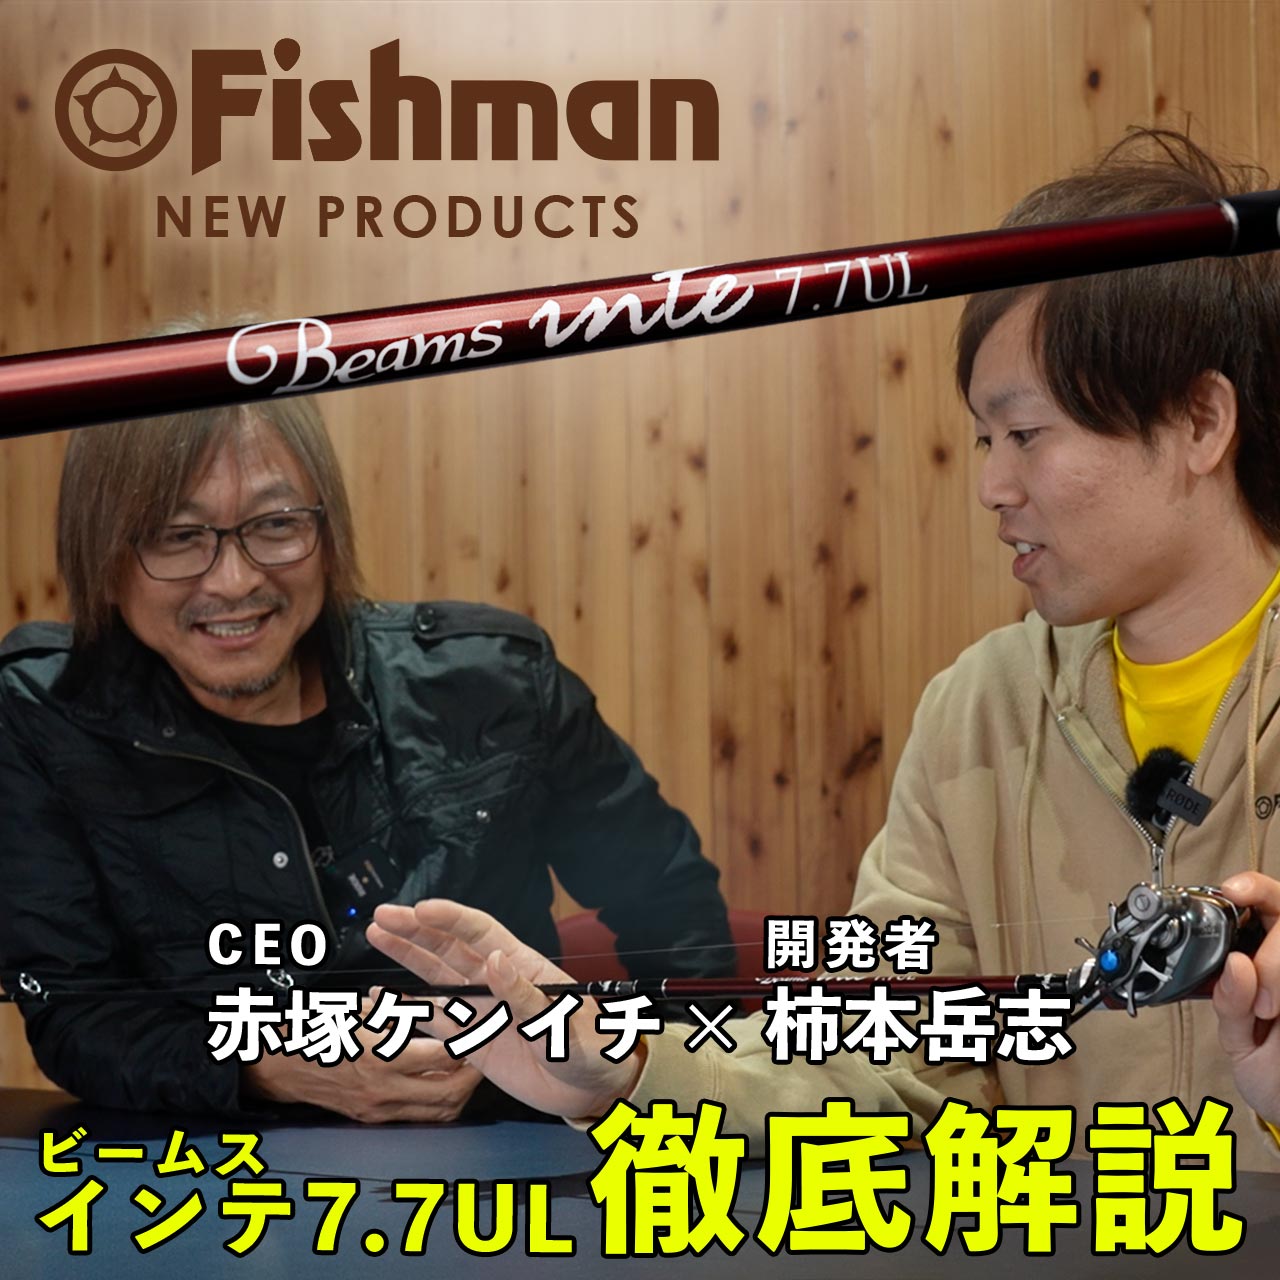 Fishman TV